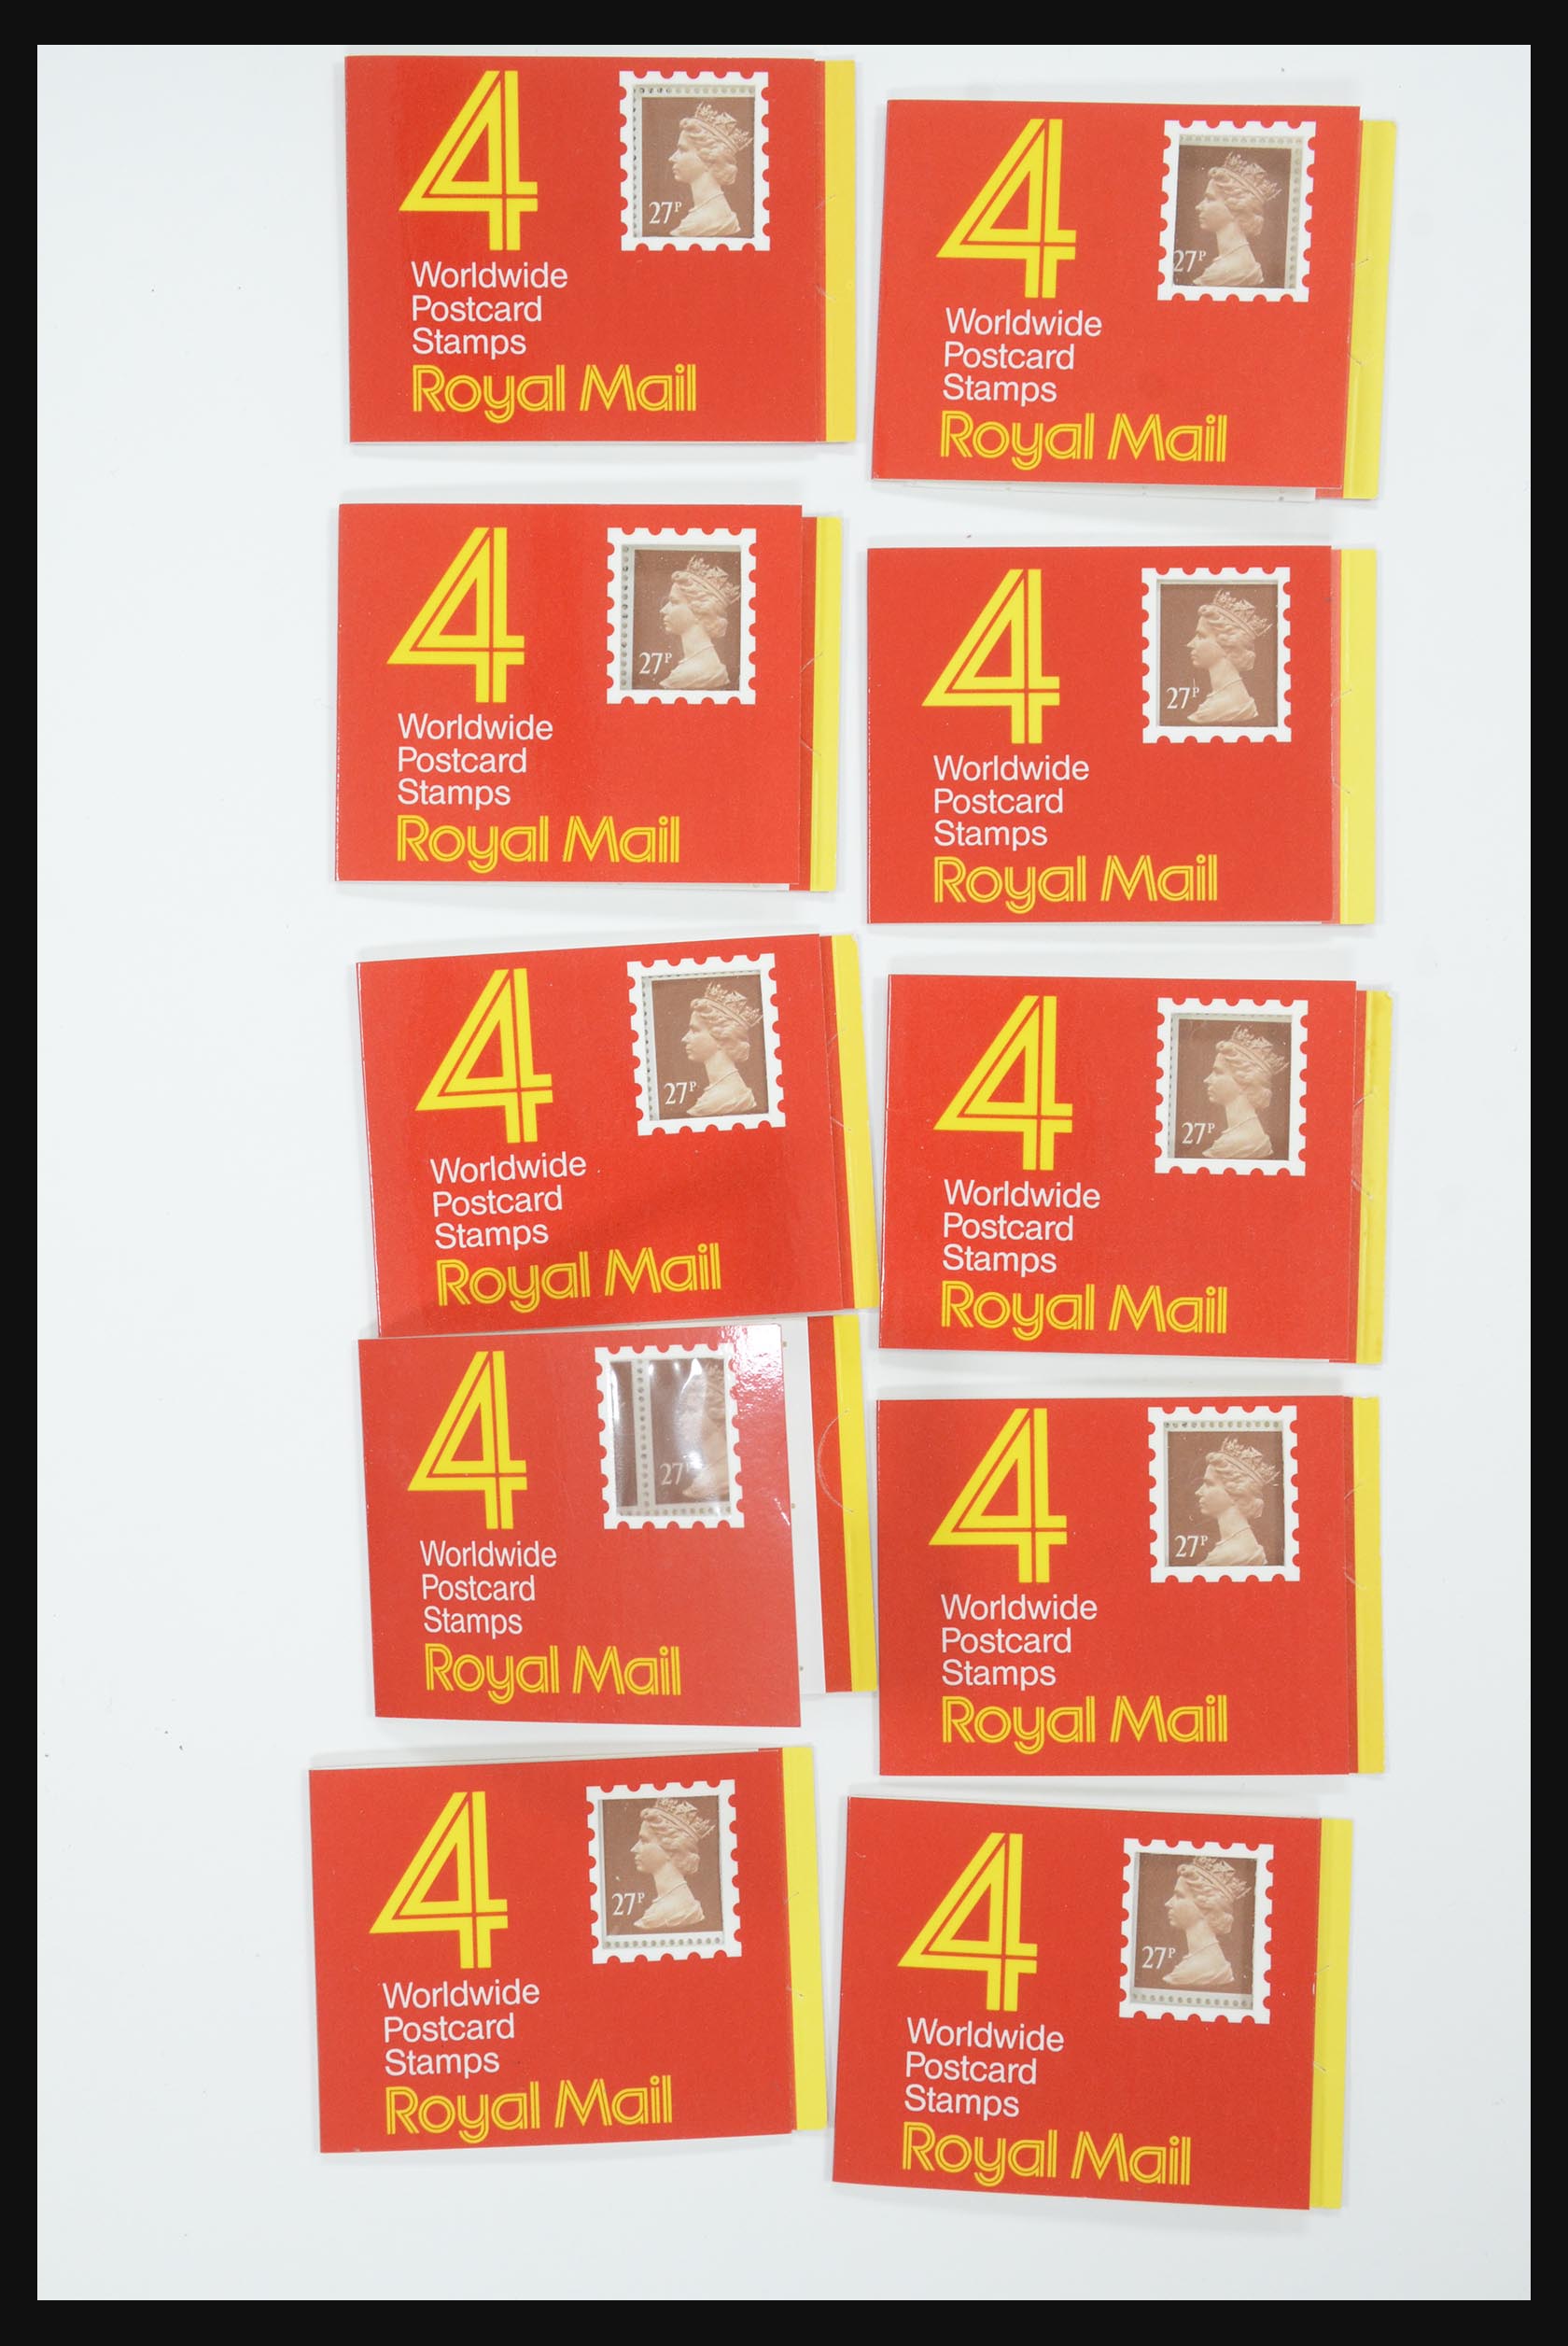 31961 072 - 31961 Great Britain stampbooklets 1971-1999.